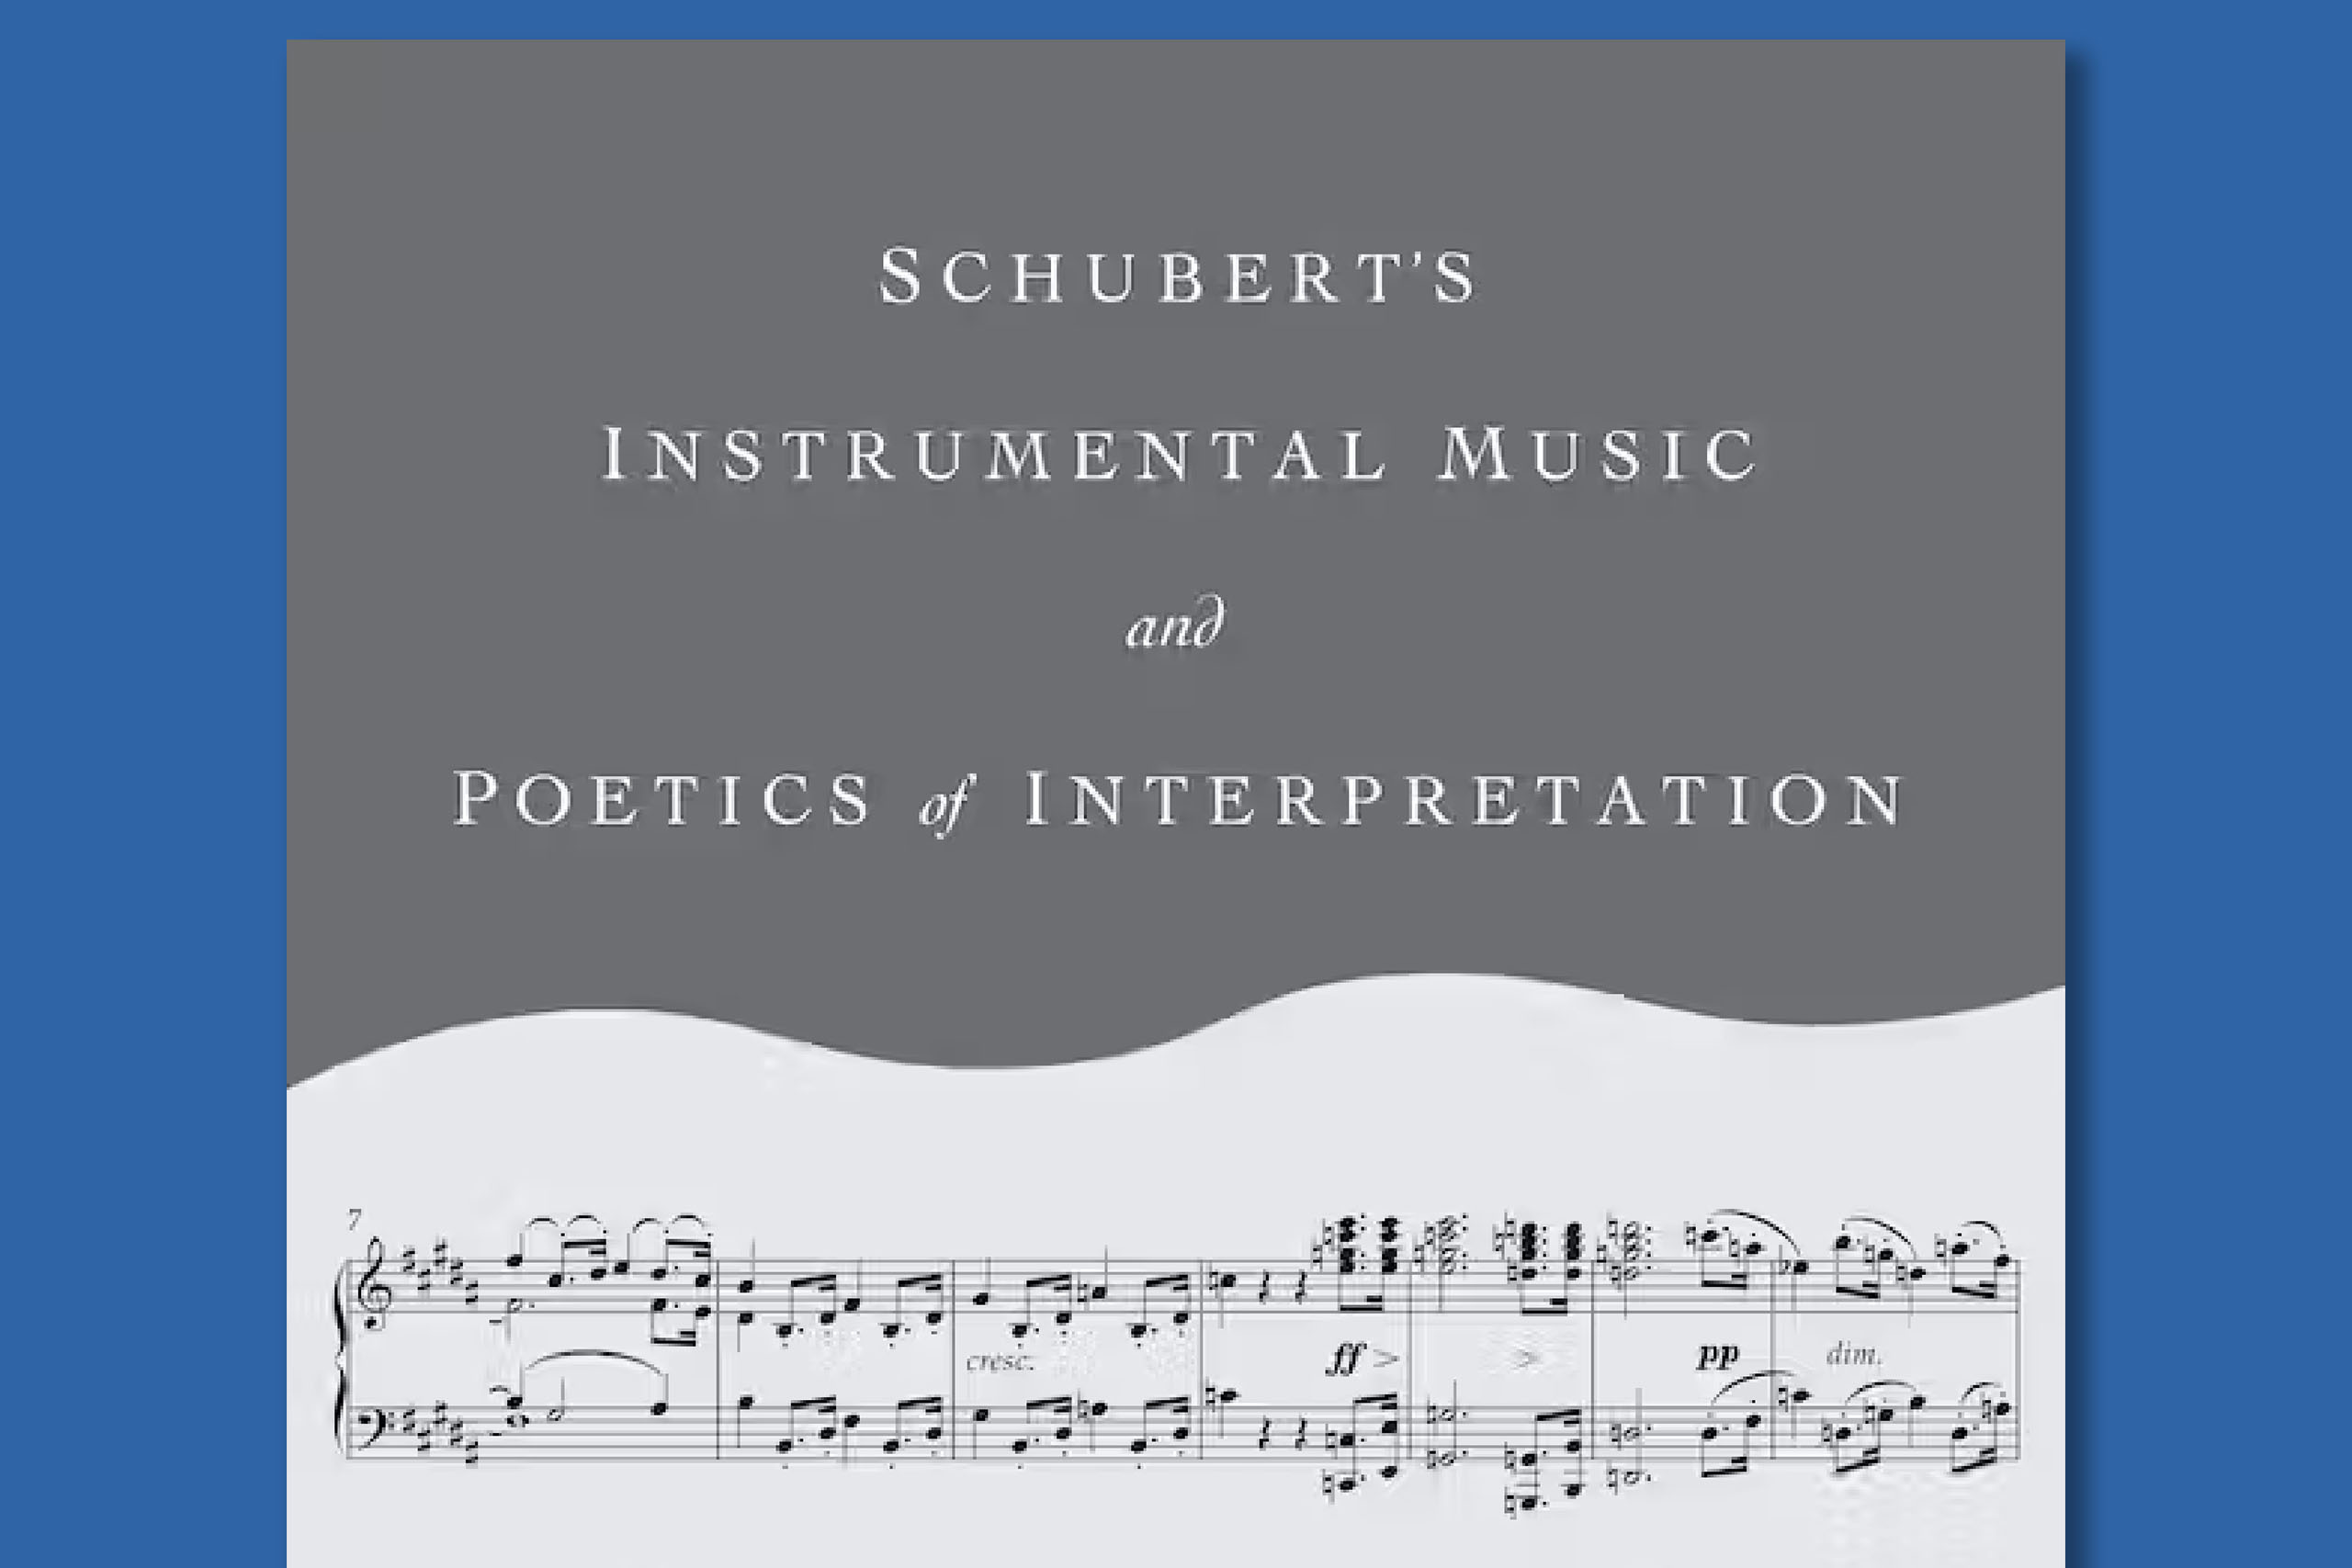 The Cambridge History of Twentieth Century Music Nicholas Cook Anthony  Pople PDF